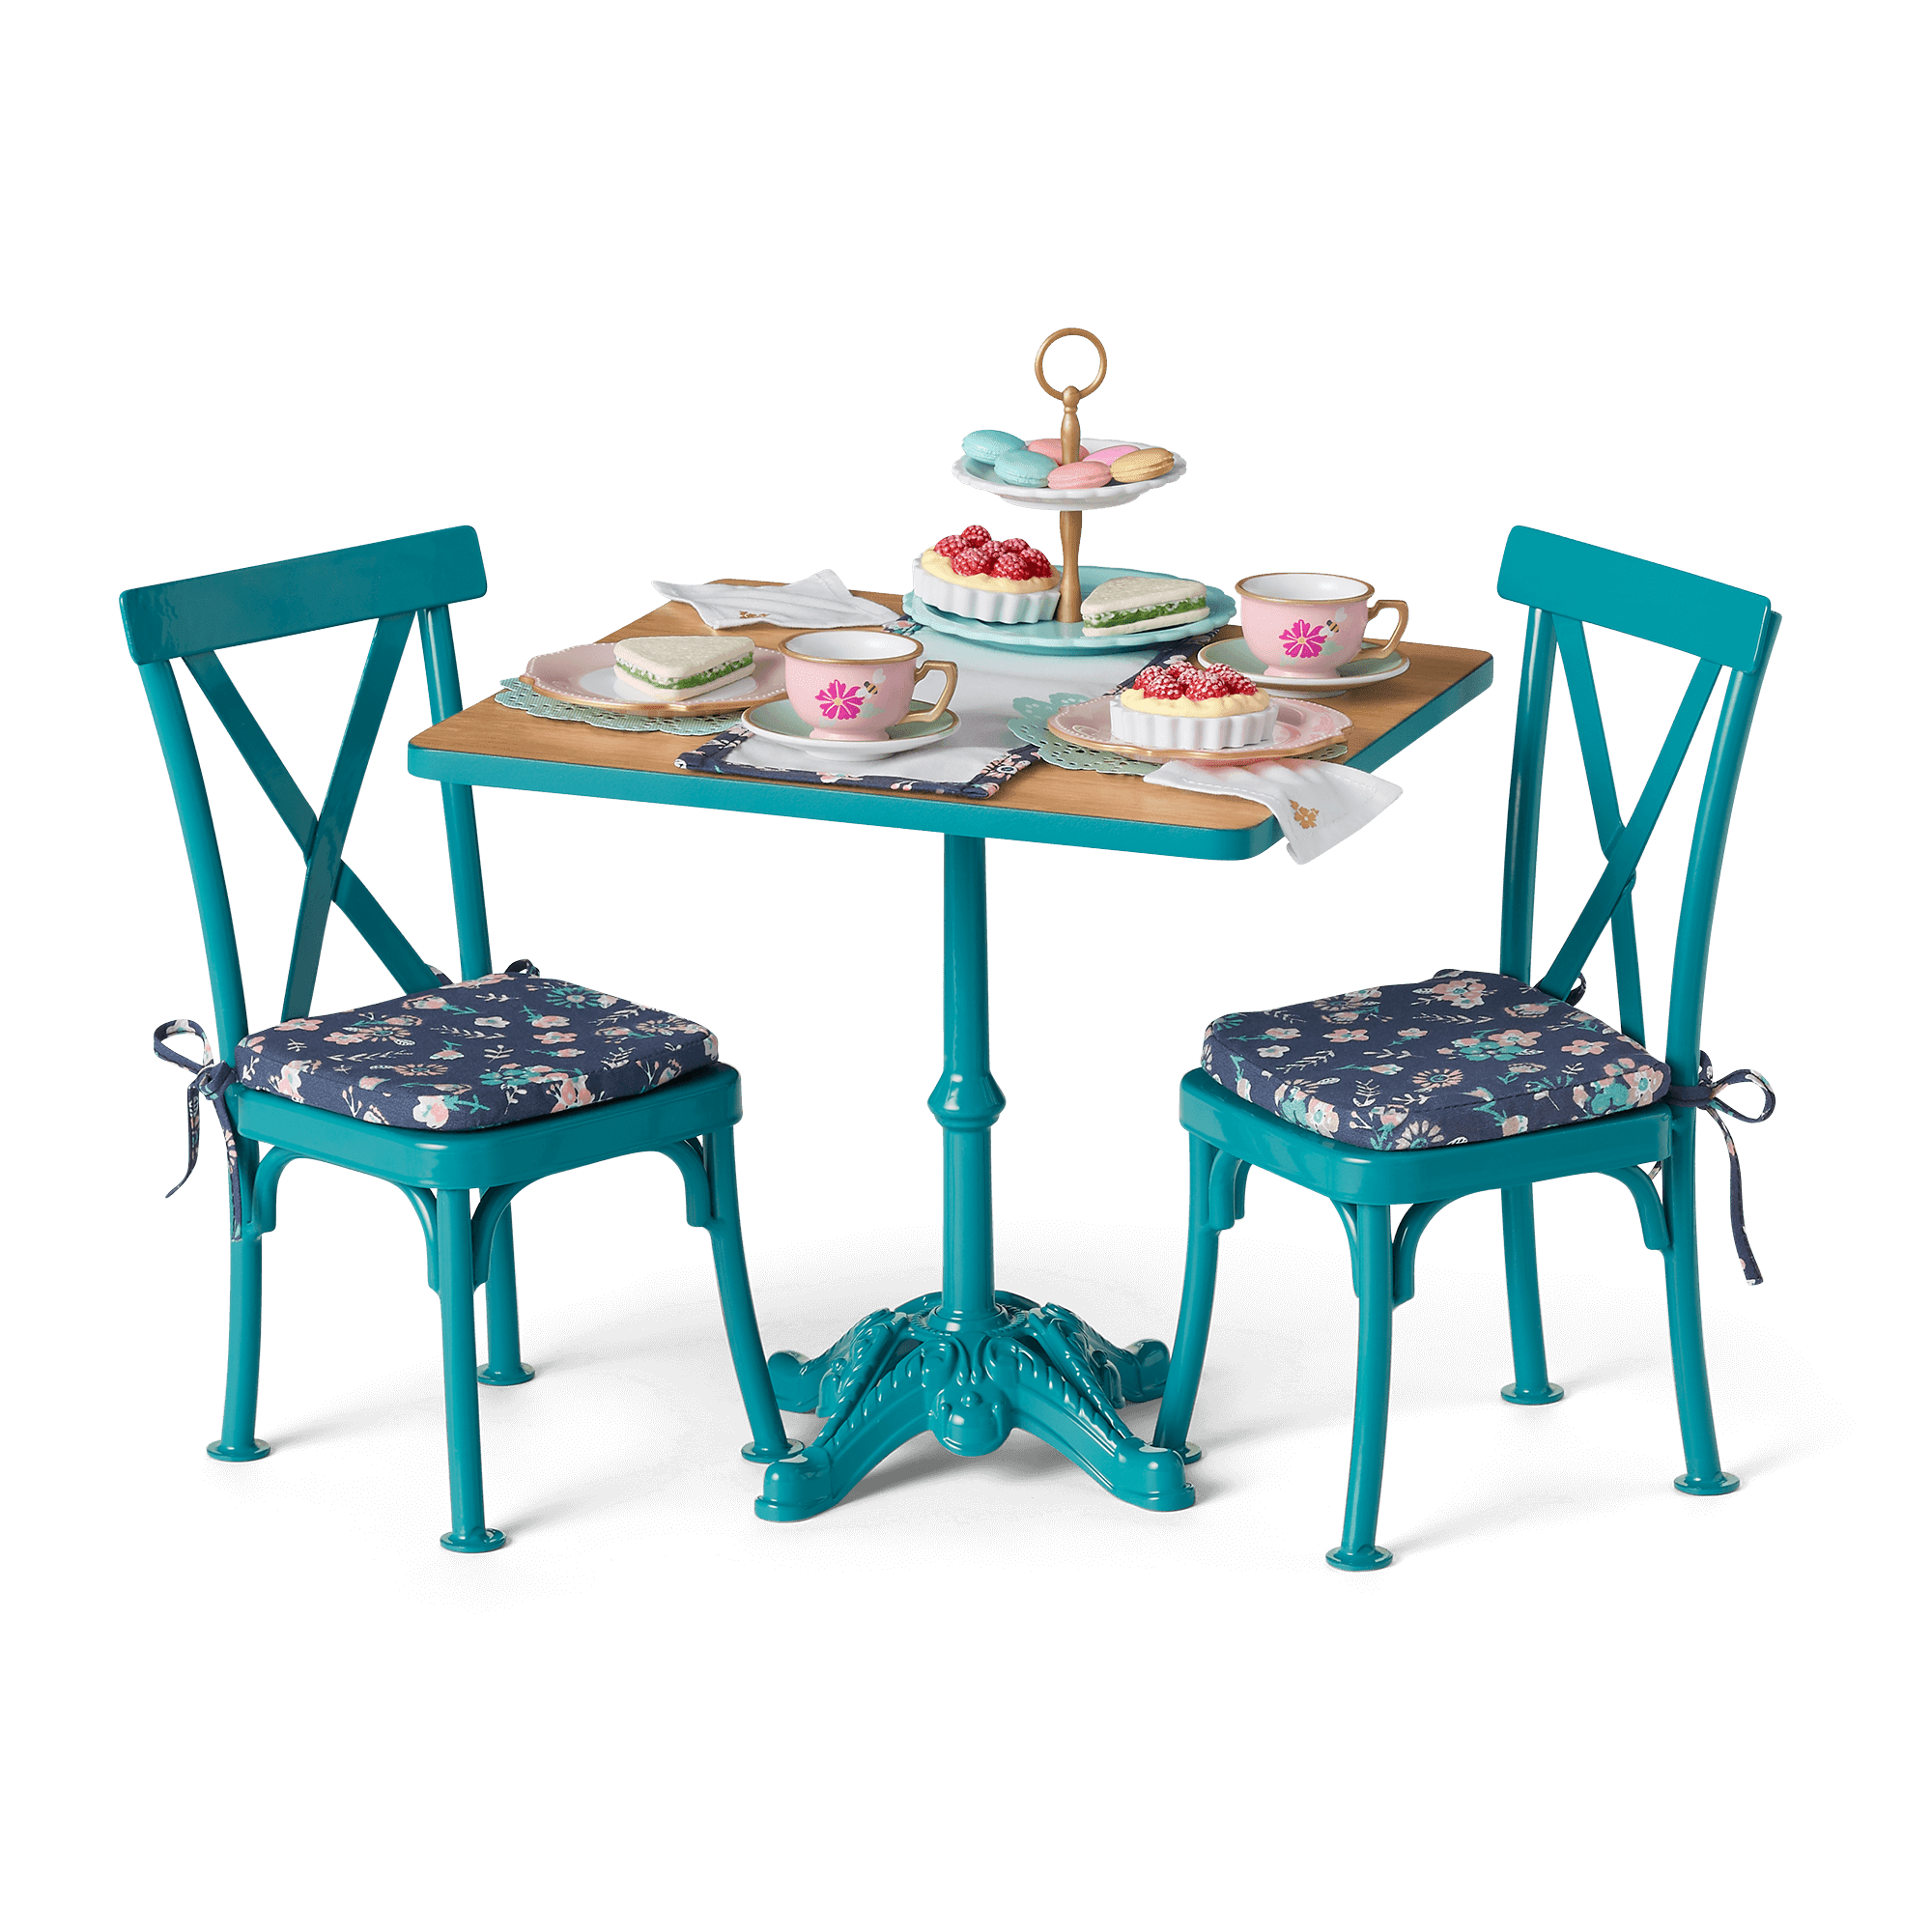 Teatime Table & Chairs Set | American Girl